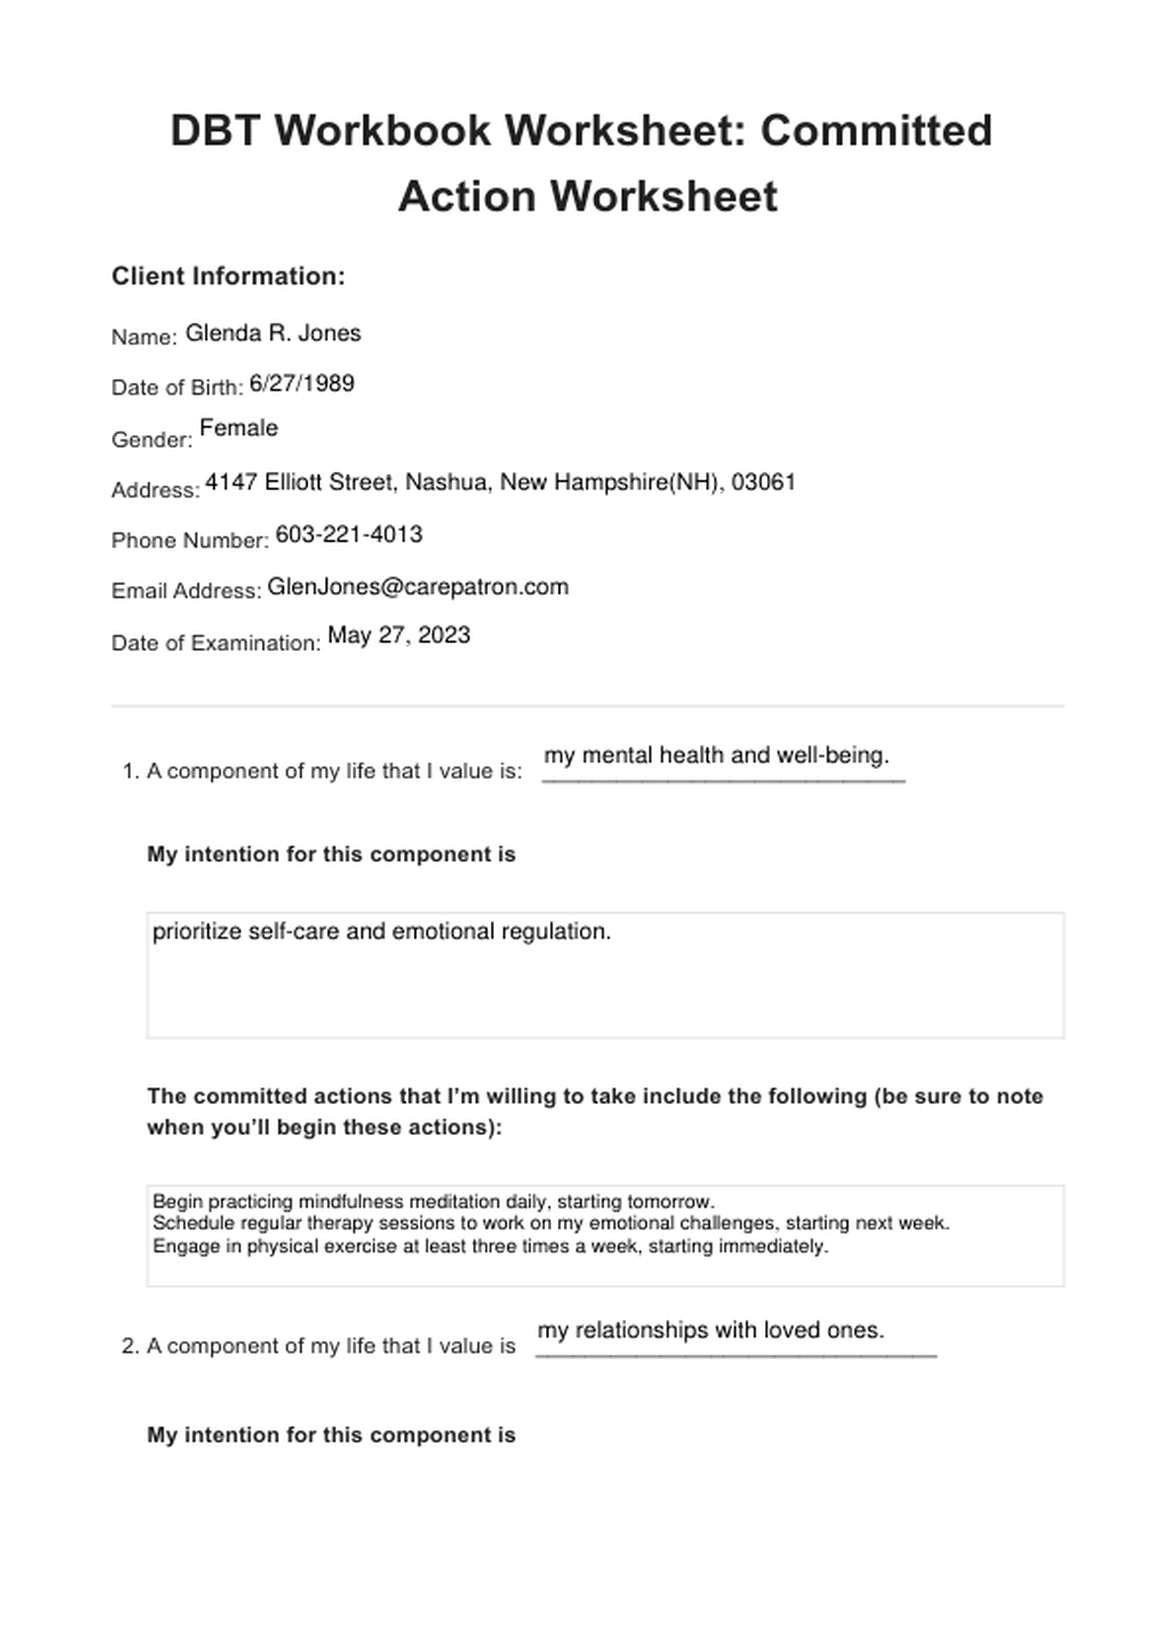 DBT Workbook PDF Example